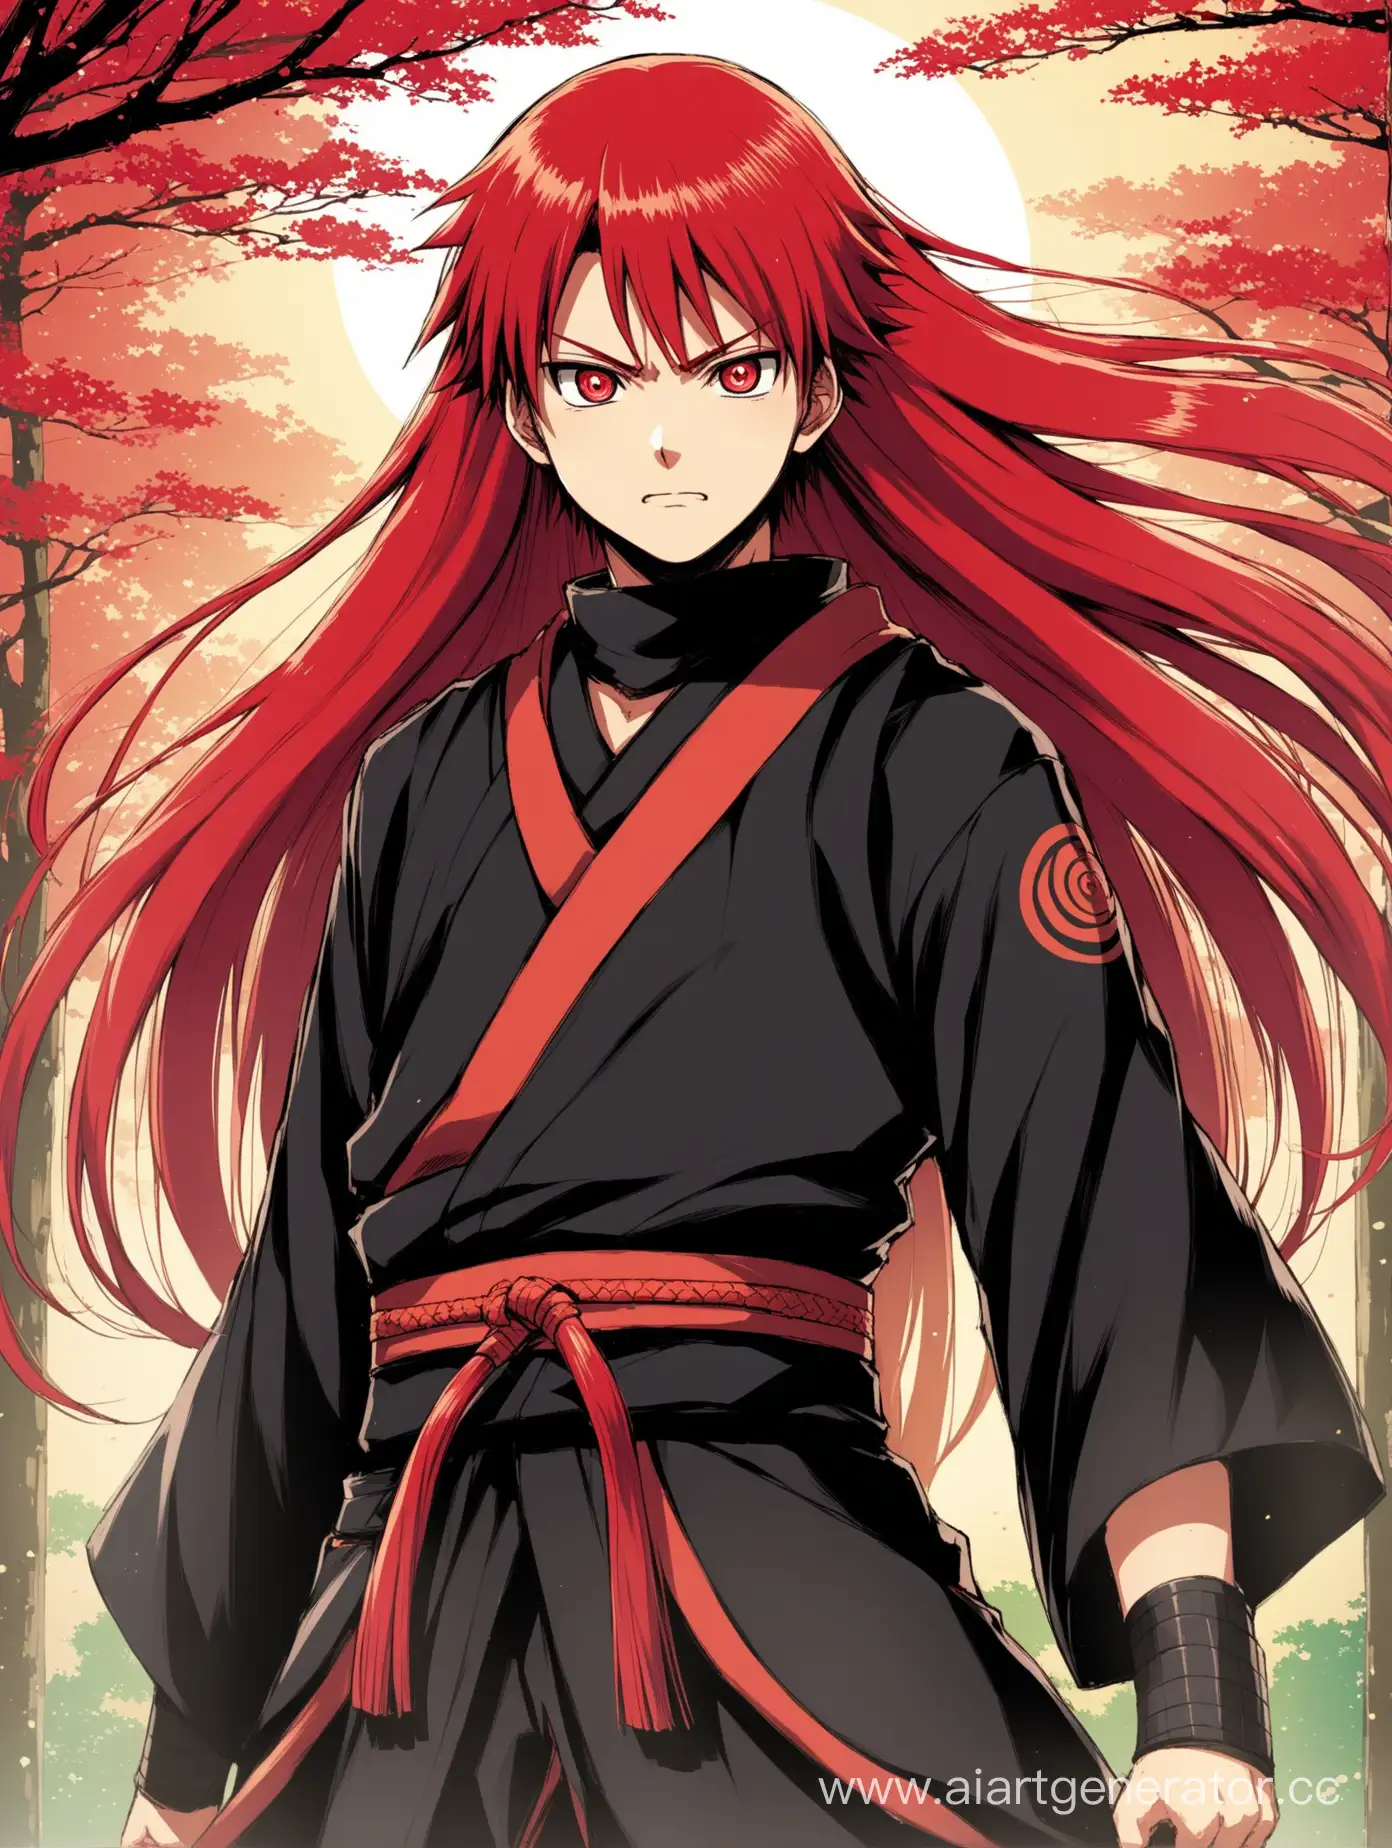 very long long red hair, crimson eyes, a boy in Otogakure Shinobi clothes, son of Karin Uzumaki, Naruto setting